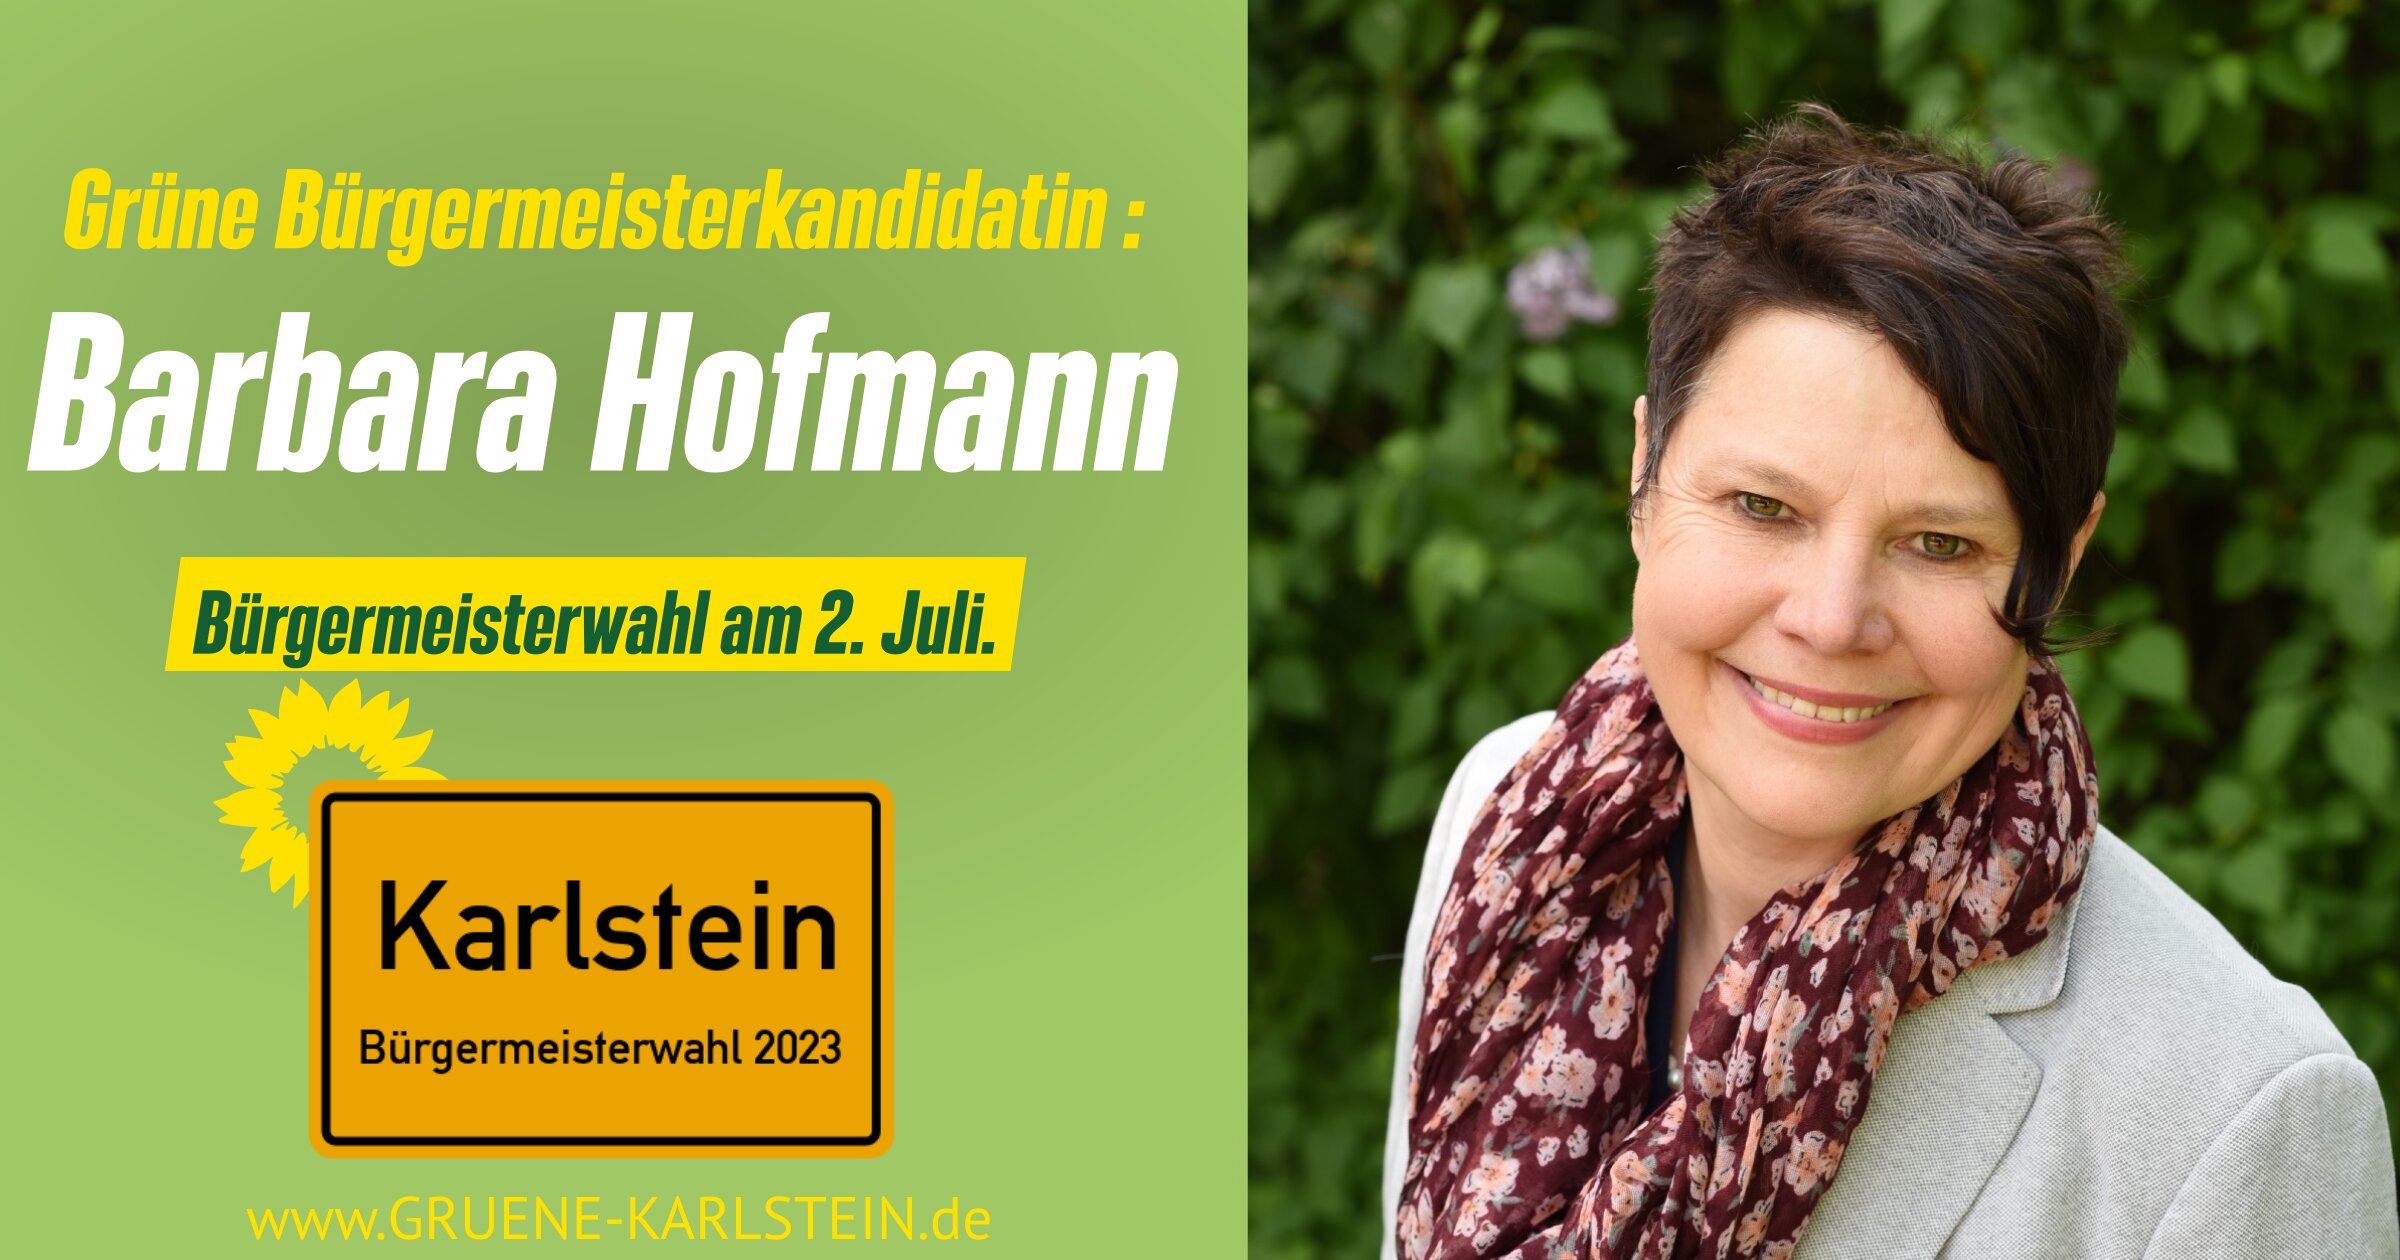 Grüne Bürgermeisterkandidatin für Karlstein: Barbara Hofmann